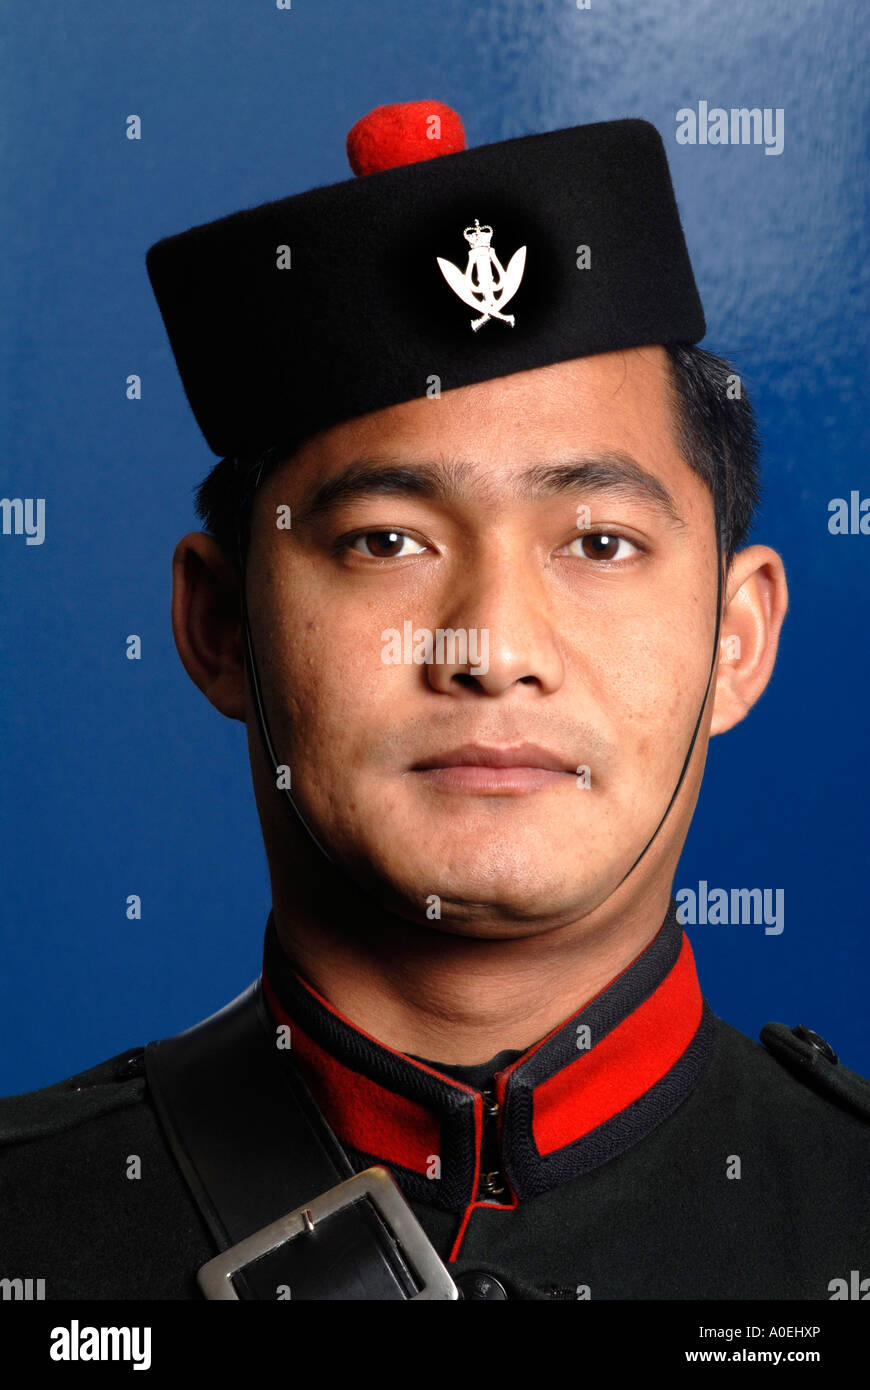 A Gurkha soldier in ceremonial uniform Stock Photo